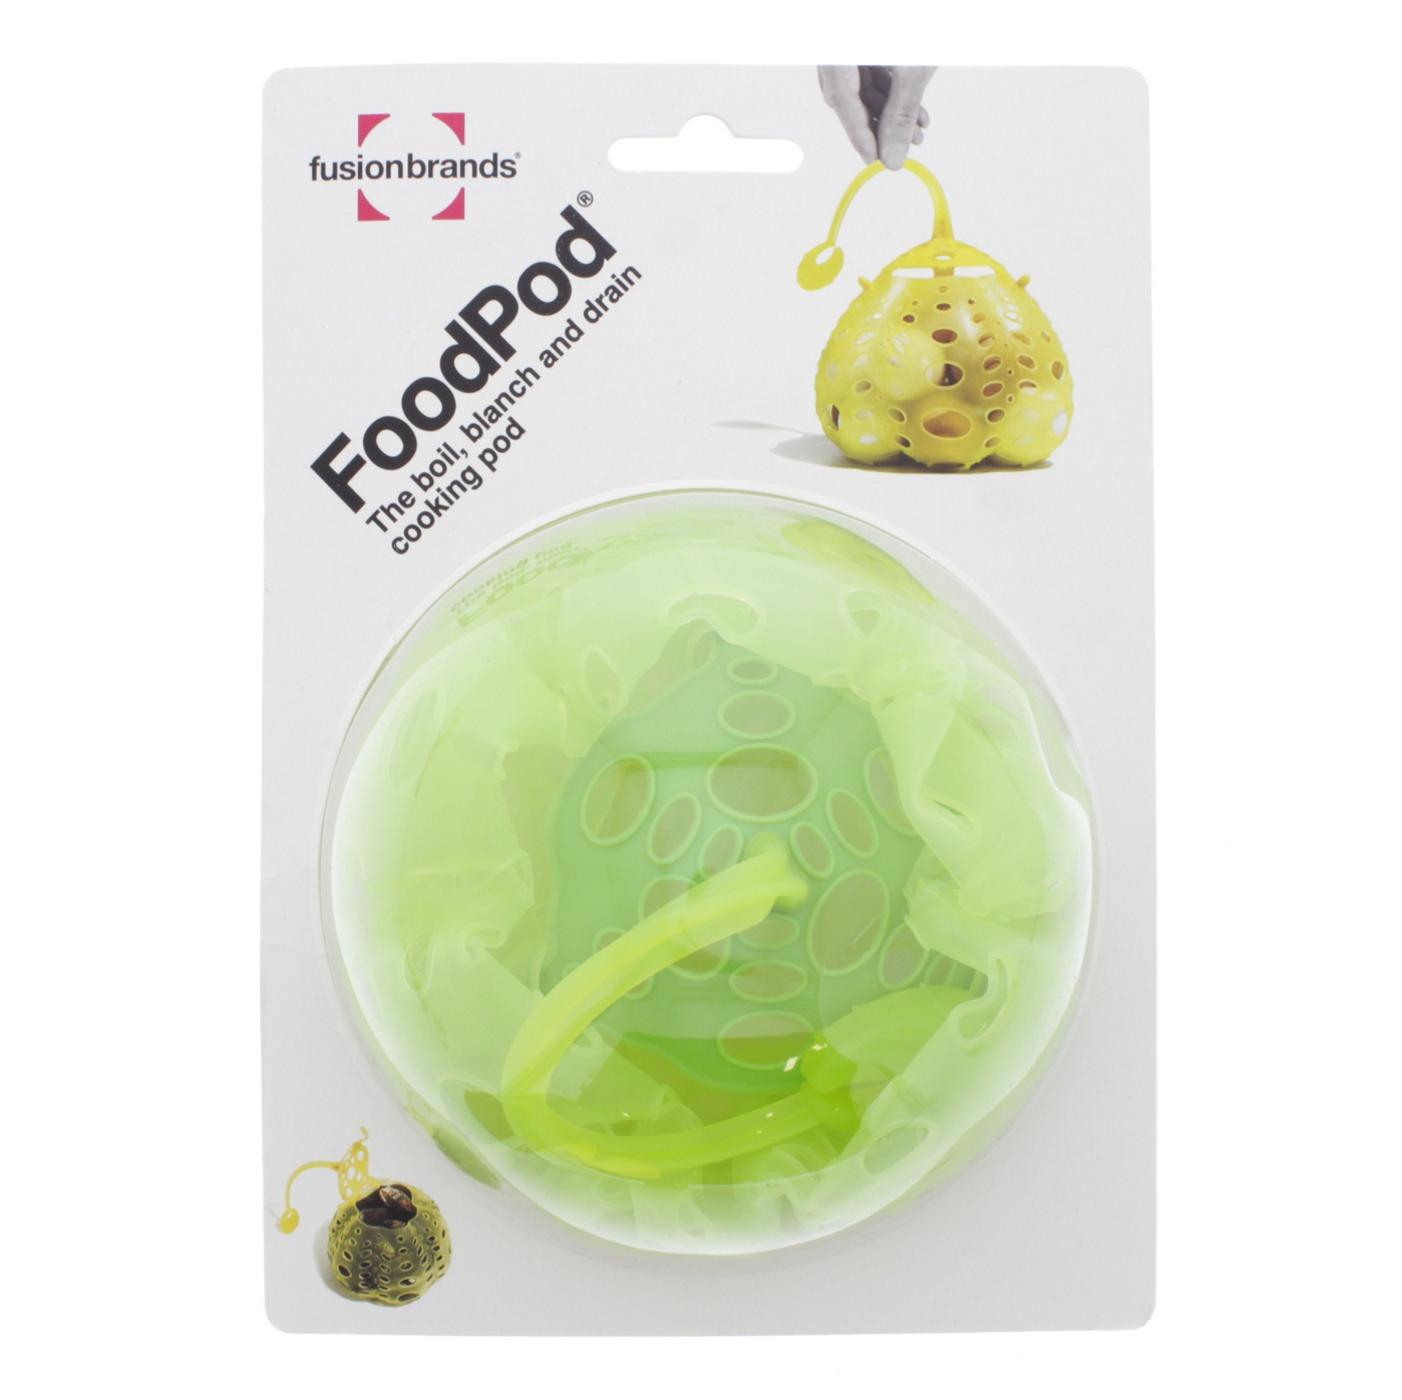 Fusionbrands FoodPod, Green; image 1 of 2